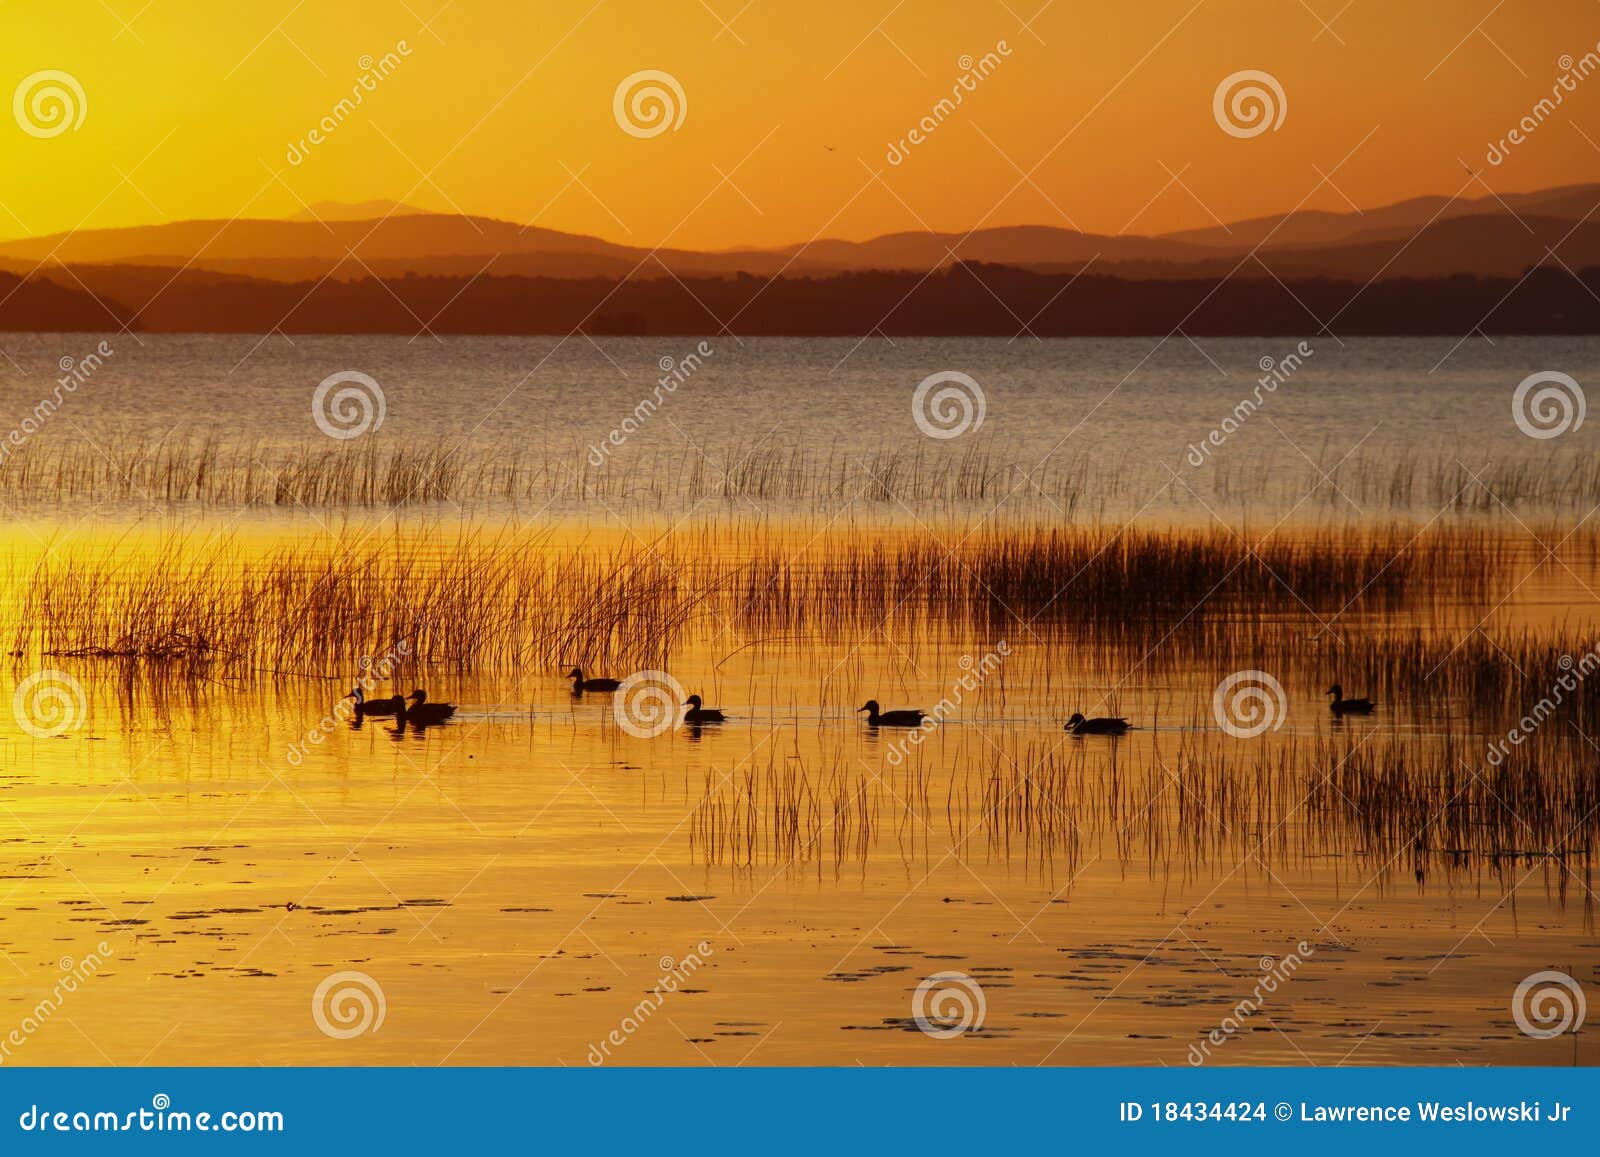 ducks swimming at sunrise lake champlain